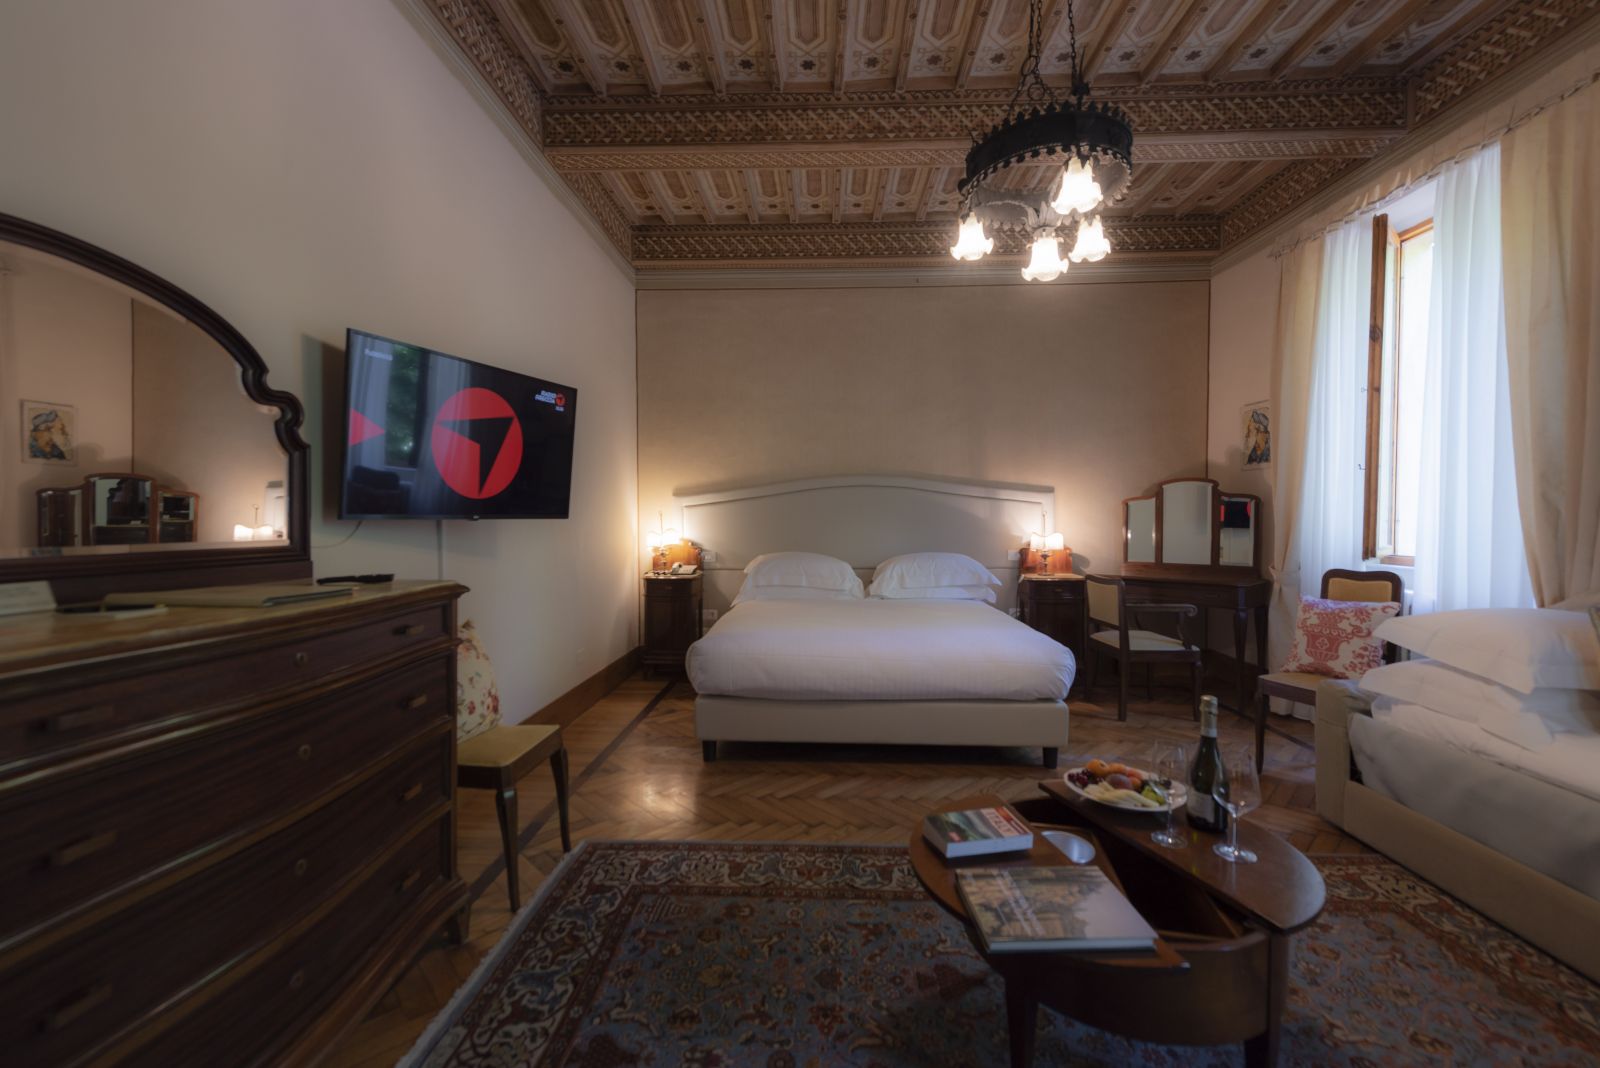 Hotel per famiglie - Hotel a Siena